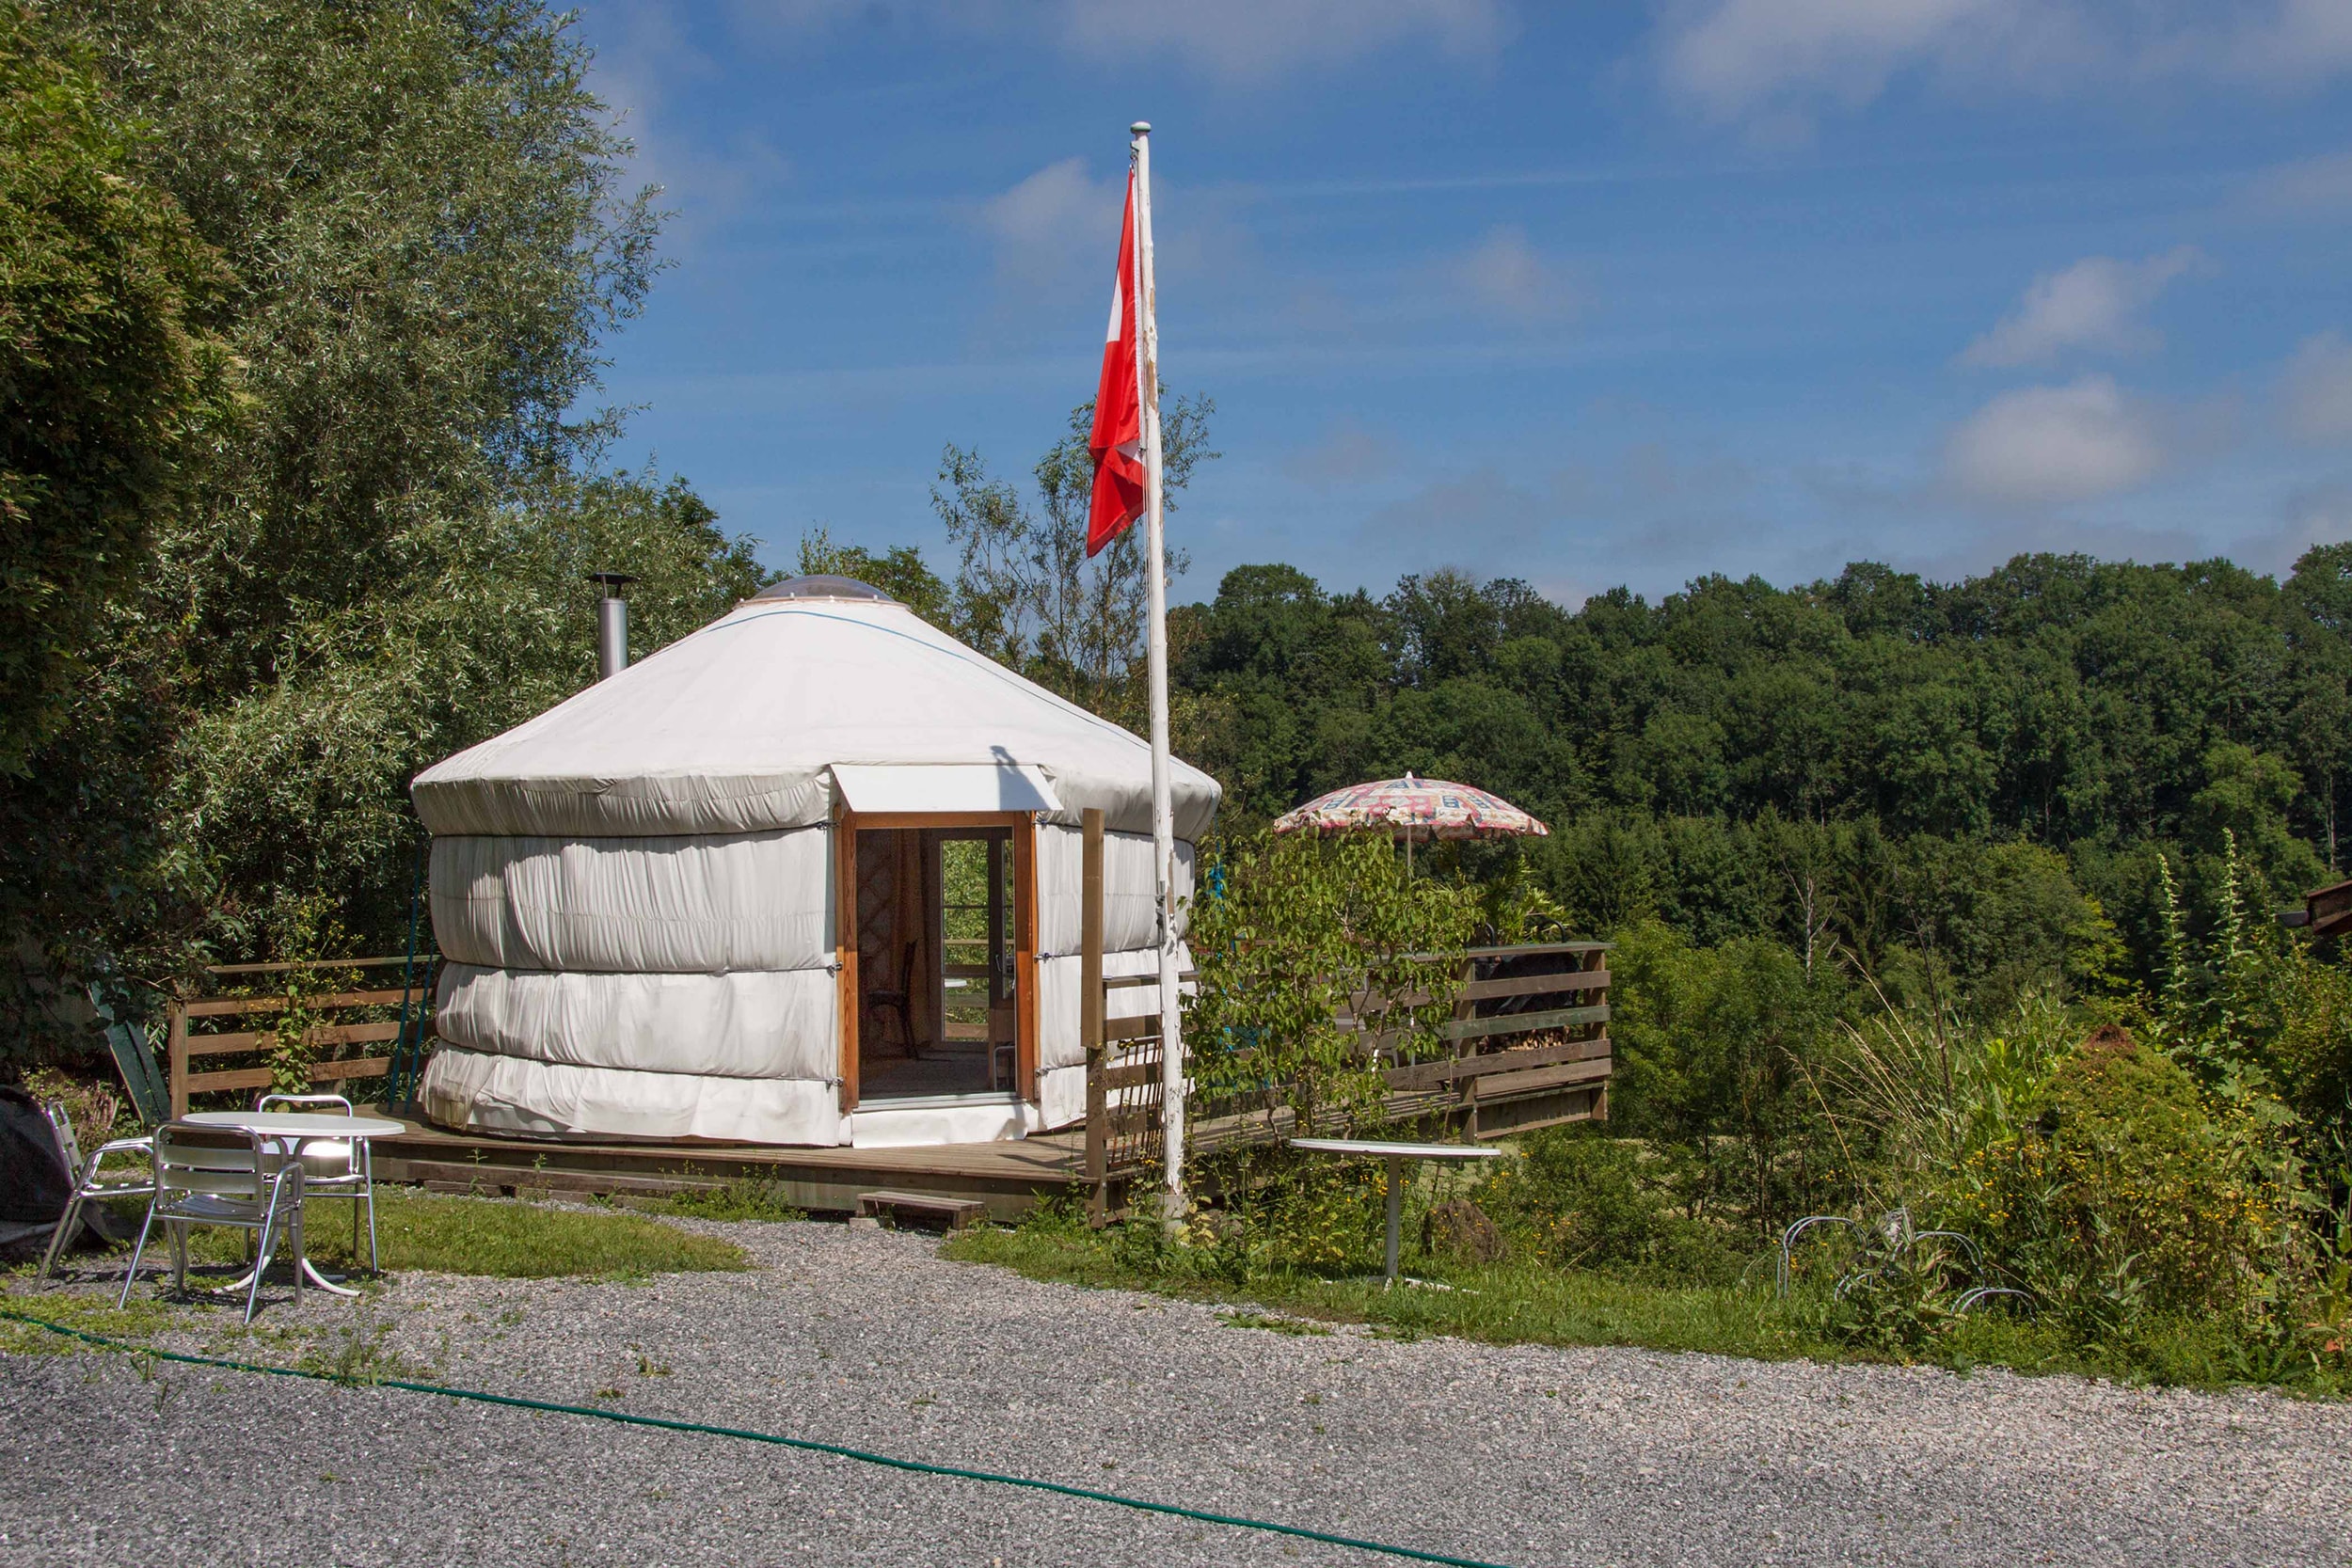 Swissyurt the Special Accommodation for Pure Nature - Bischofszell, Switzerland